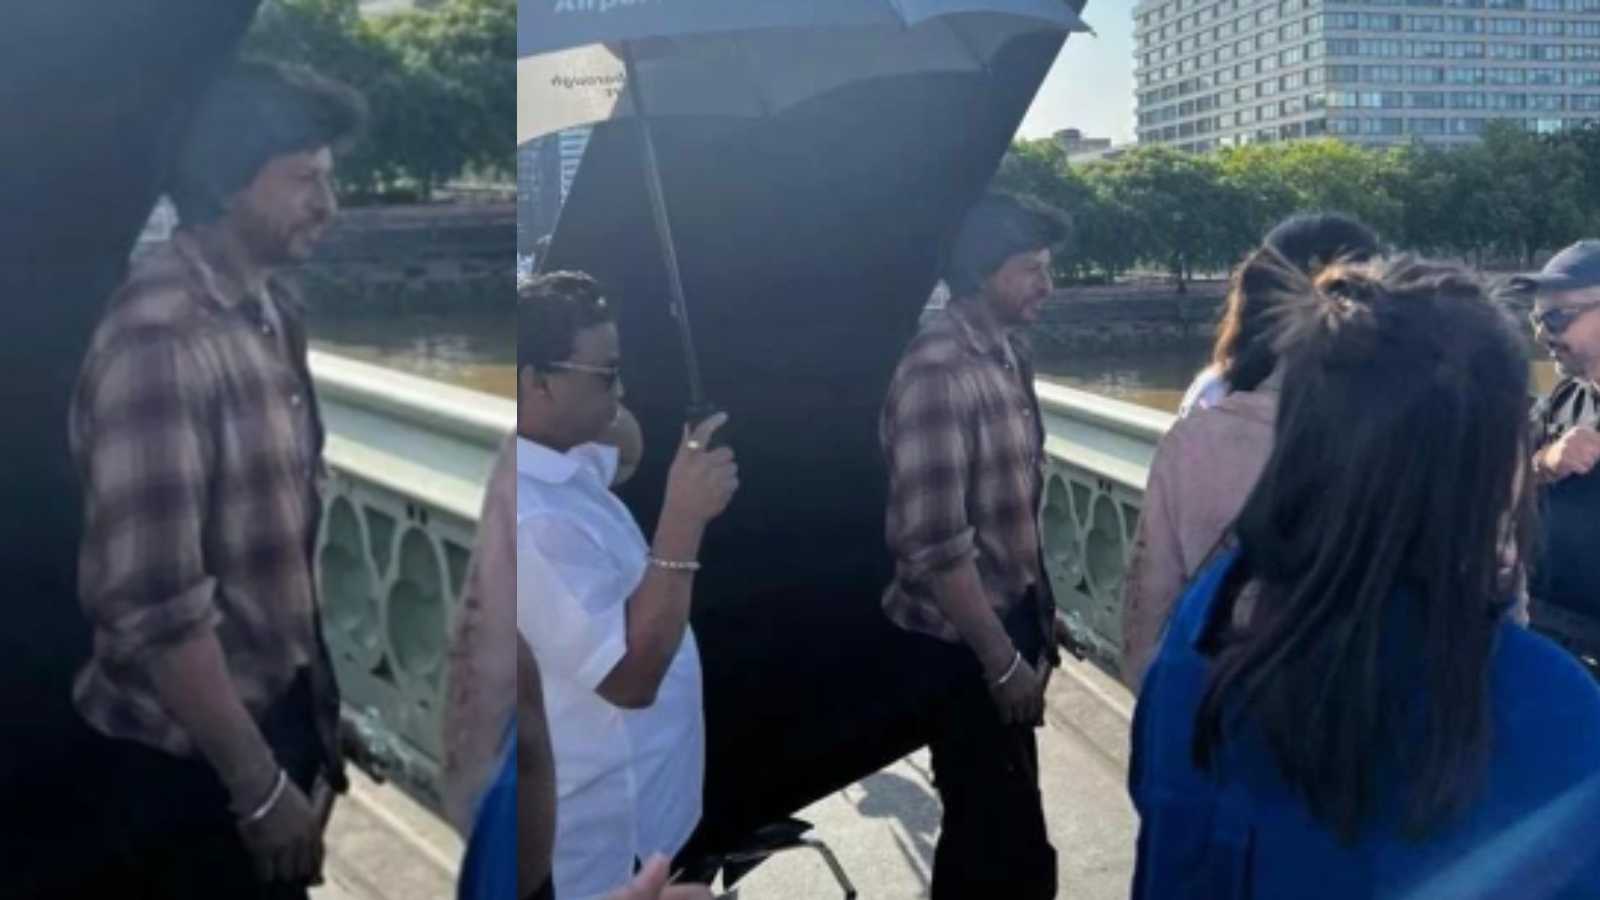 Dunki: Shah Rukh Khan looks handsome in a checkered shirt in this viral BTS sneak peek